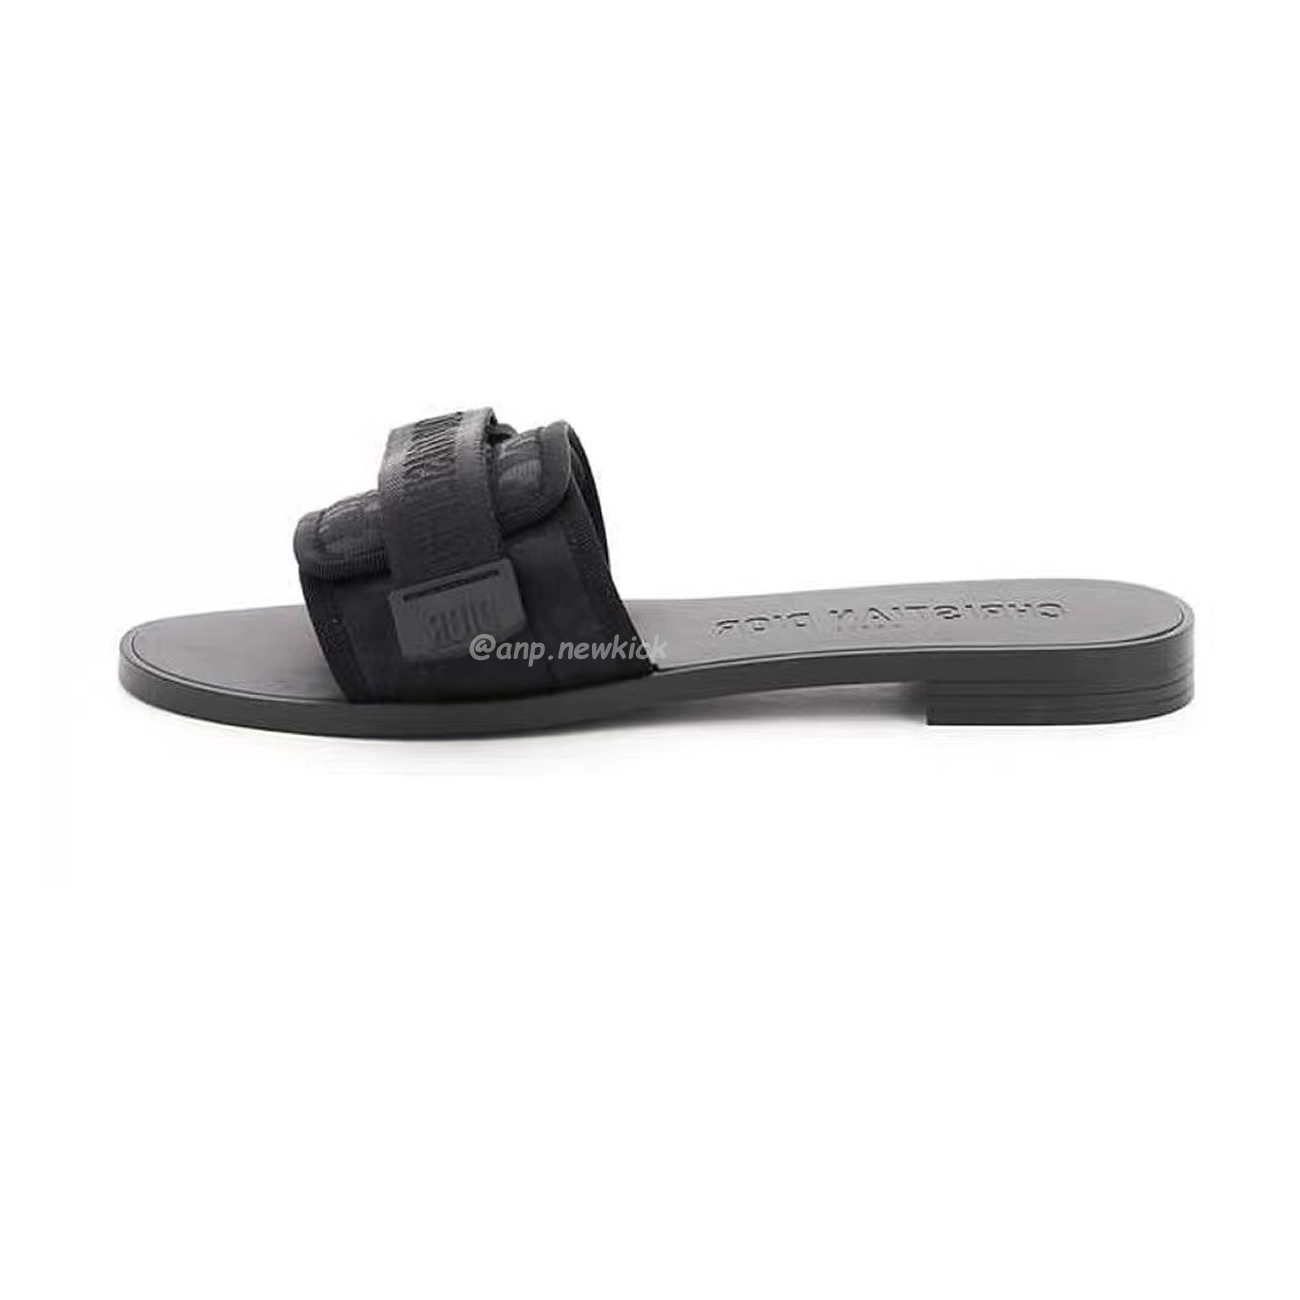 Dior 3D Velcro sandals